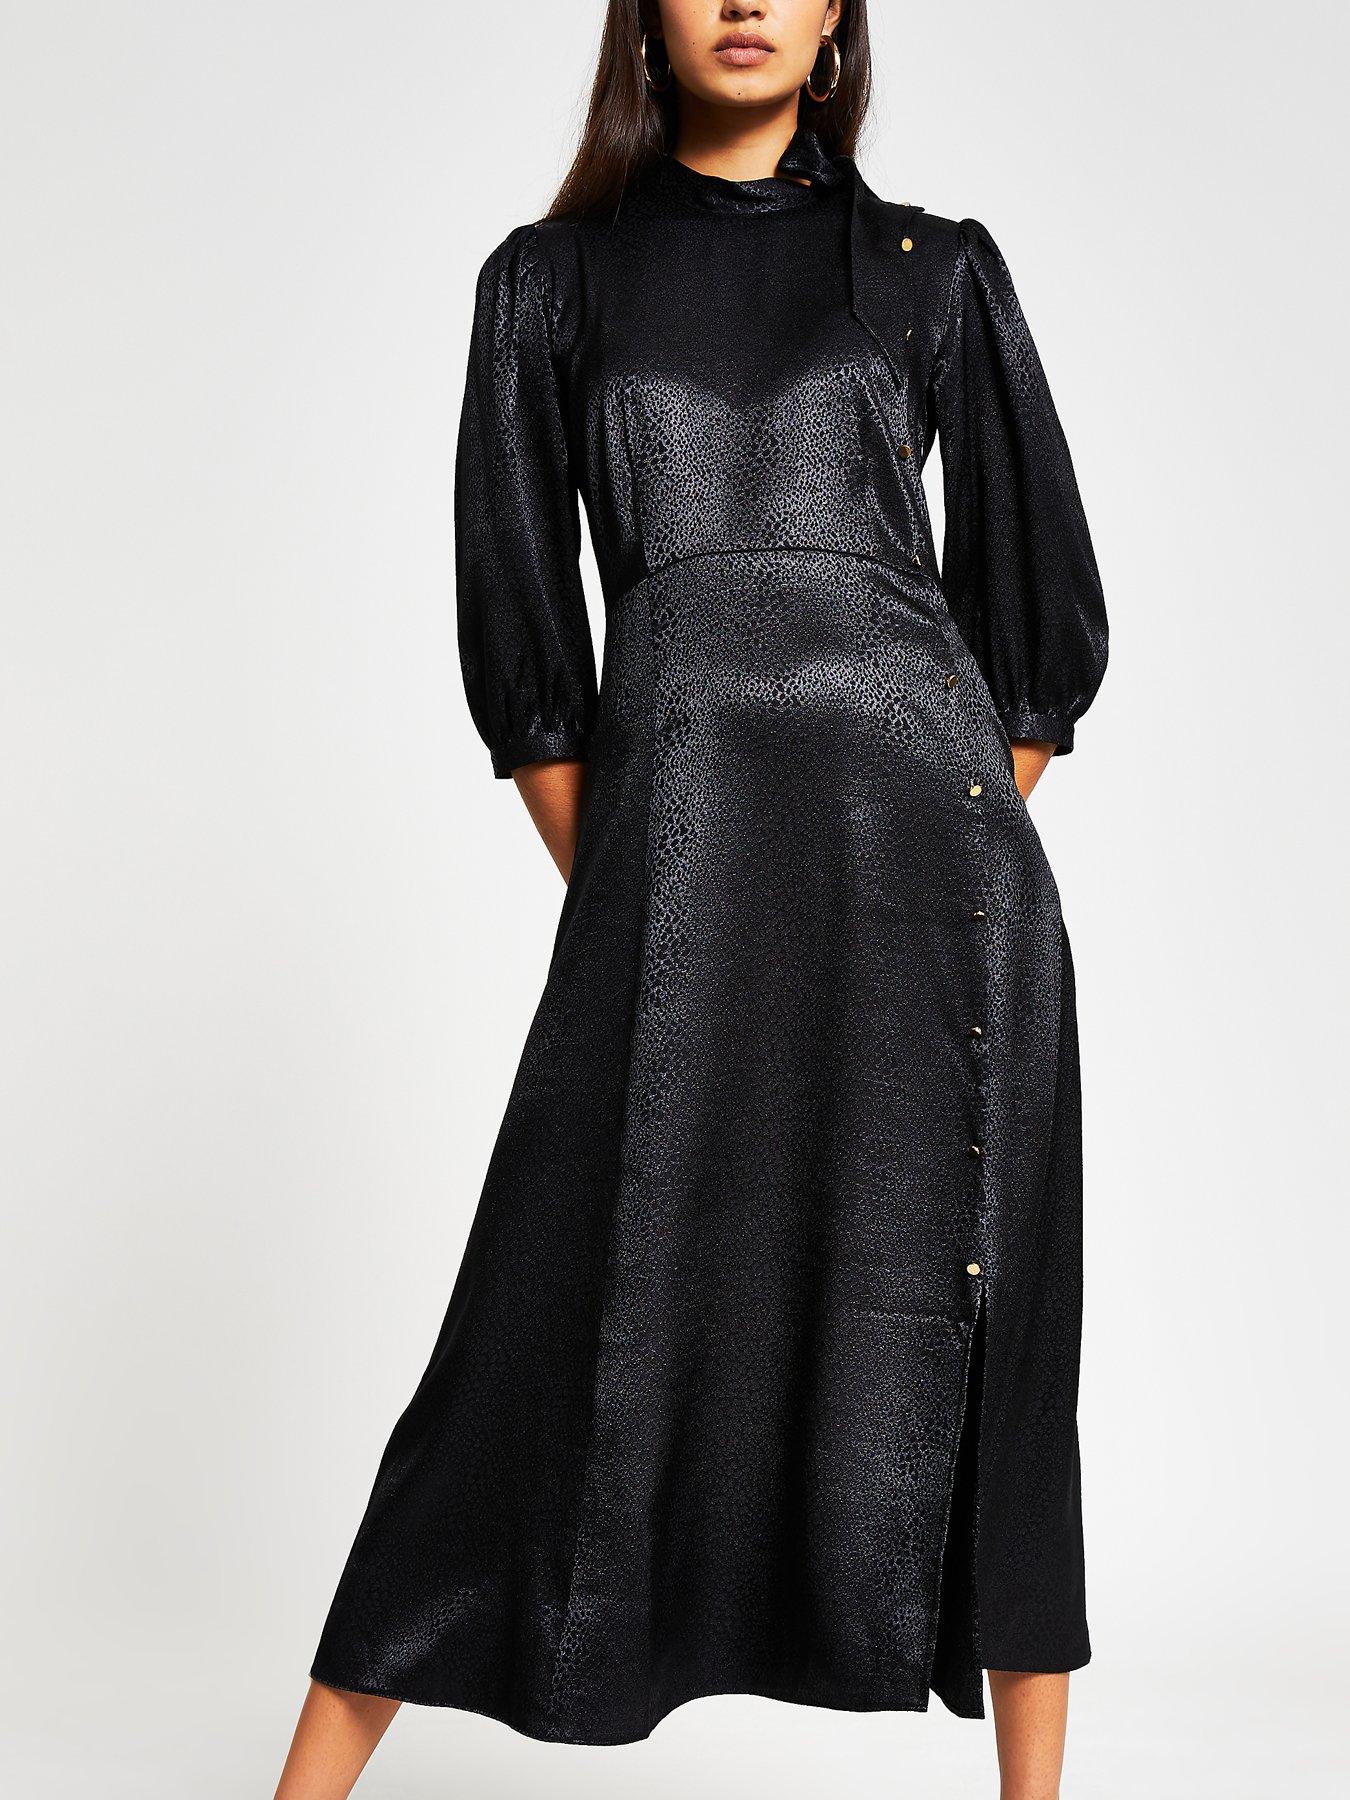 black dress with sleeves uk